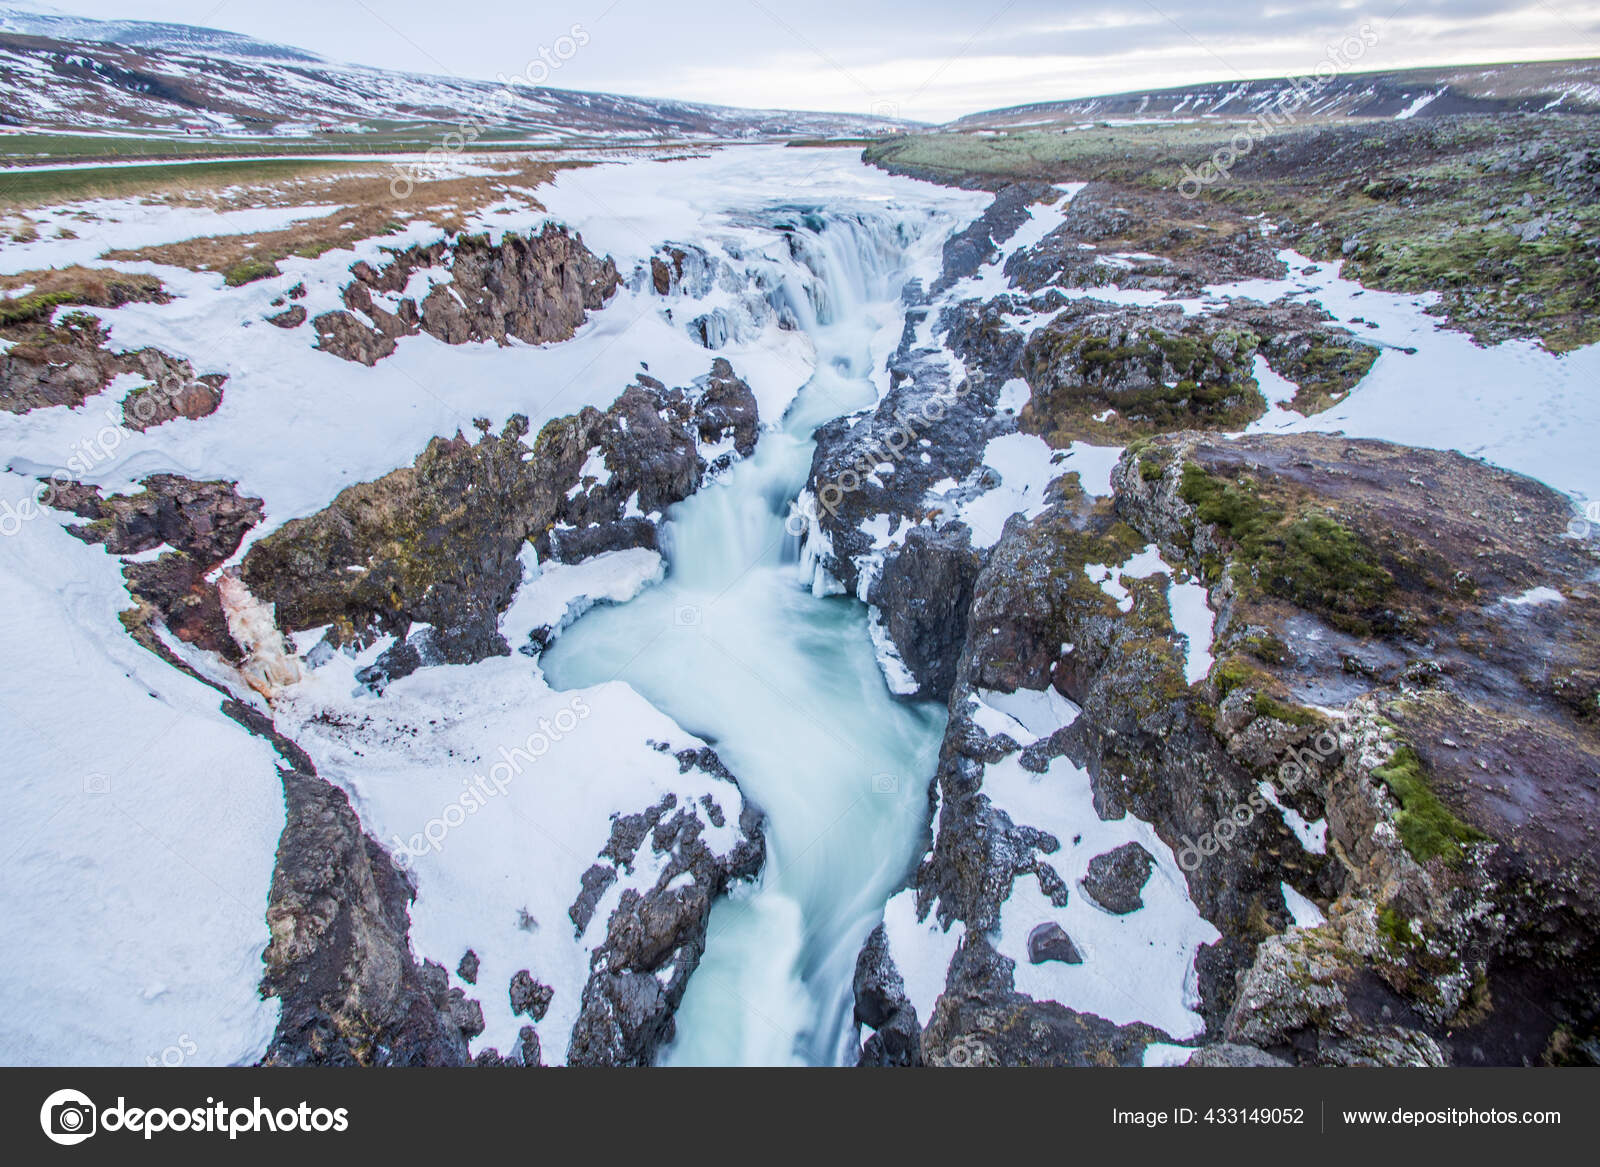 Kolugljufur Canyon Area One Icelands Most Beautiful Deadliest Places